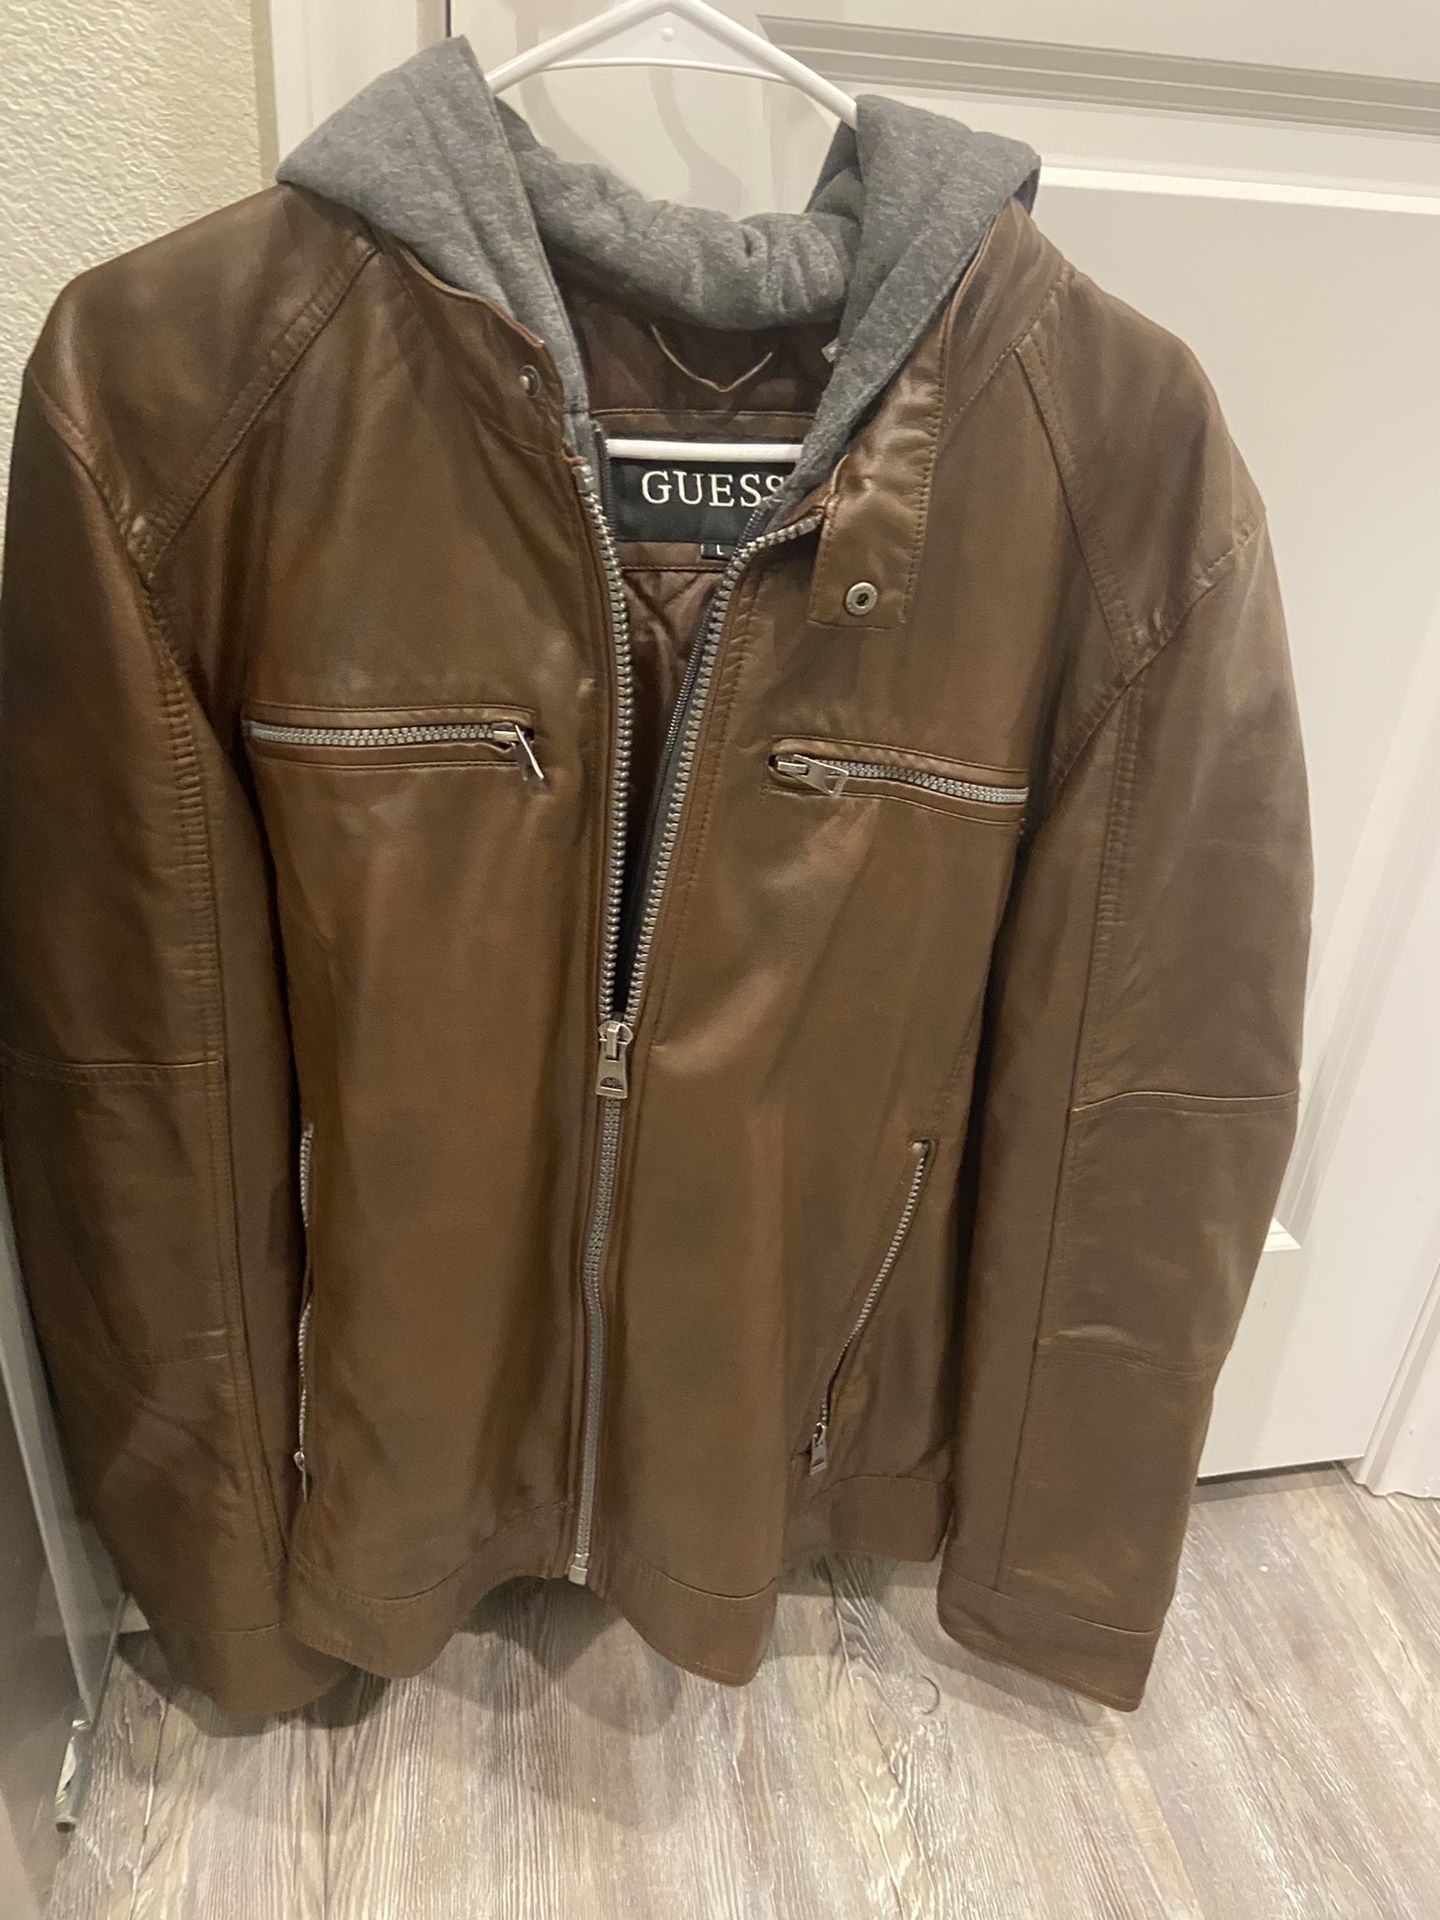 Guess Men’s Leather Jacket Size L